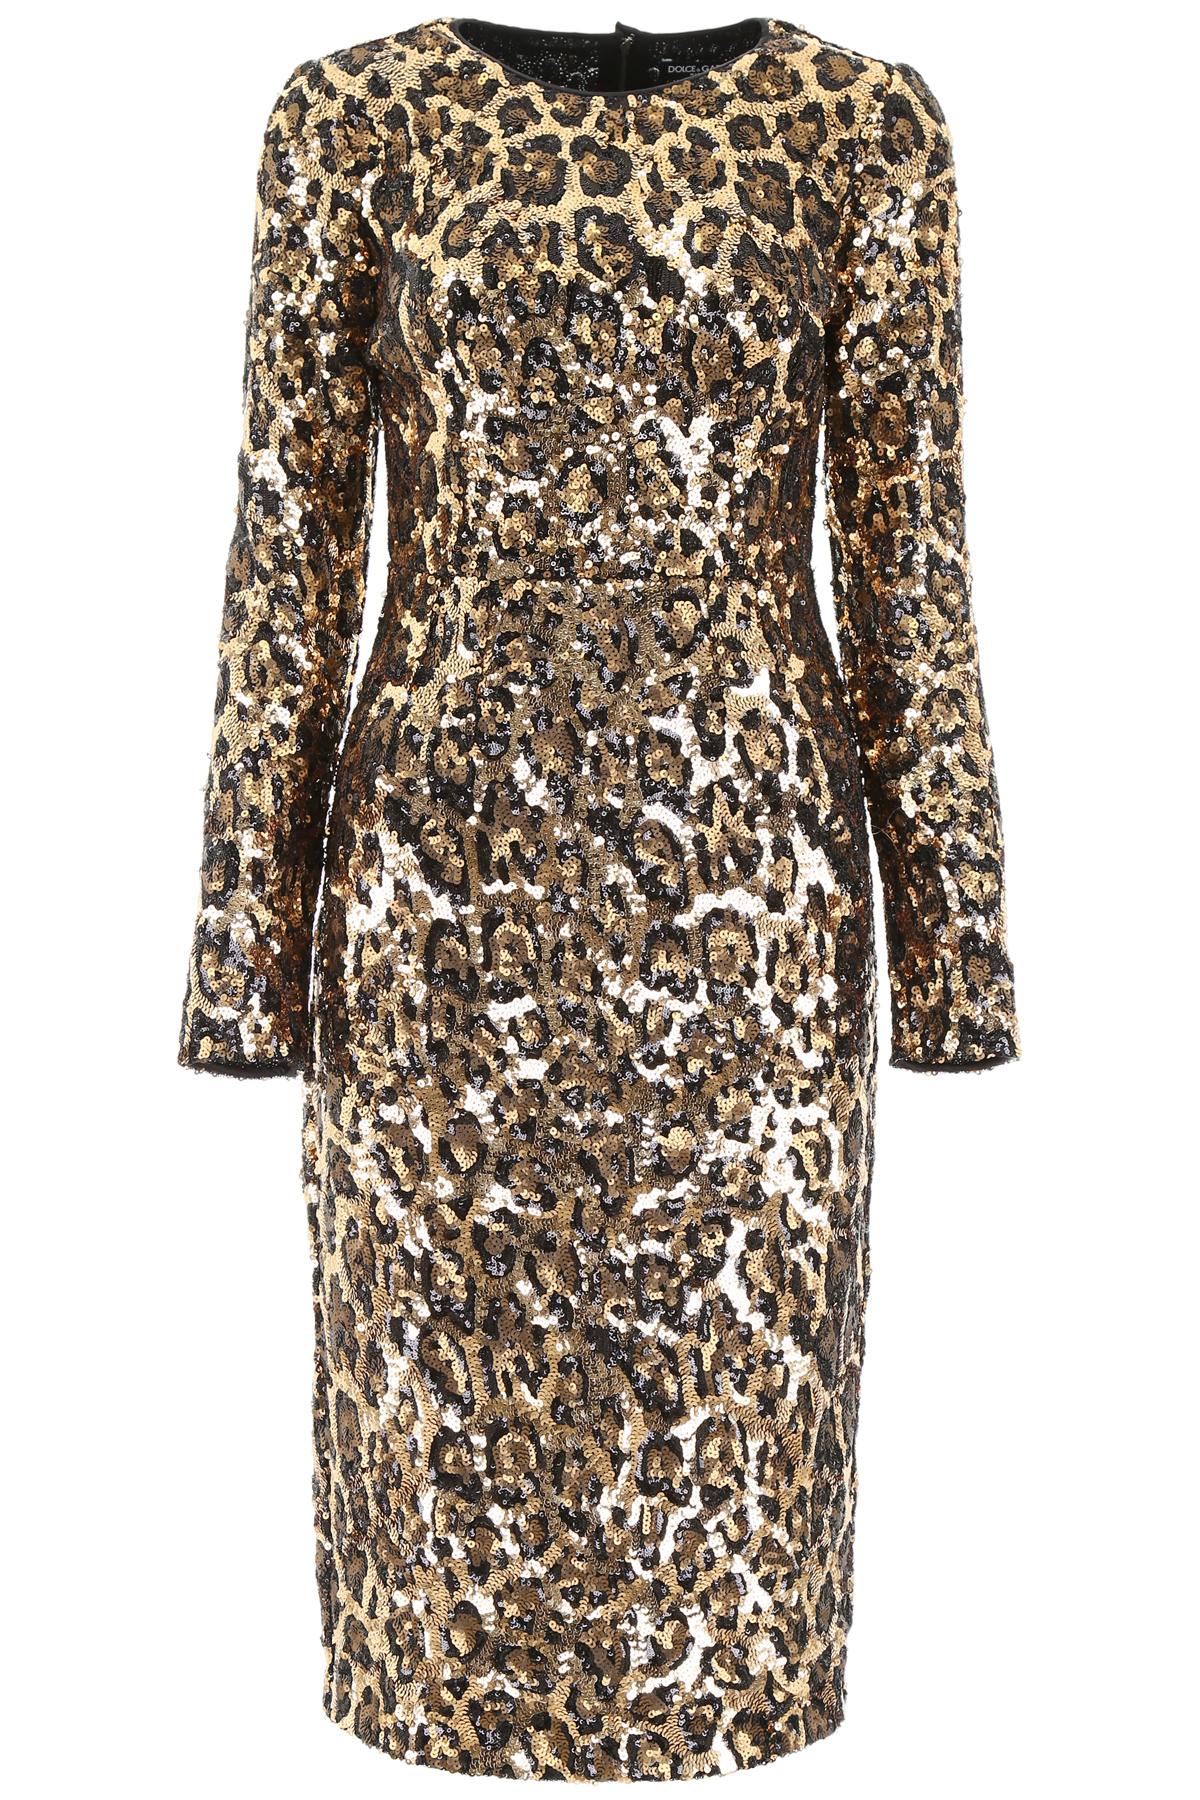 Dolce ☀ Gabbana Leopard Print Sequins ...